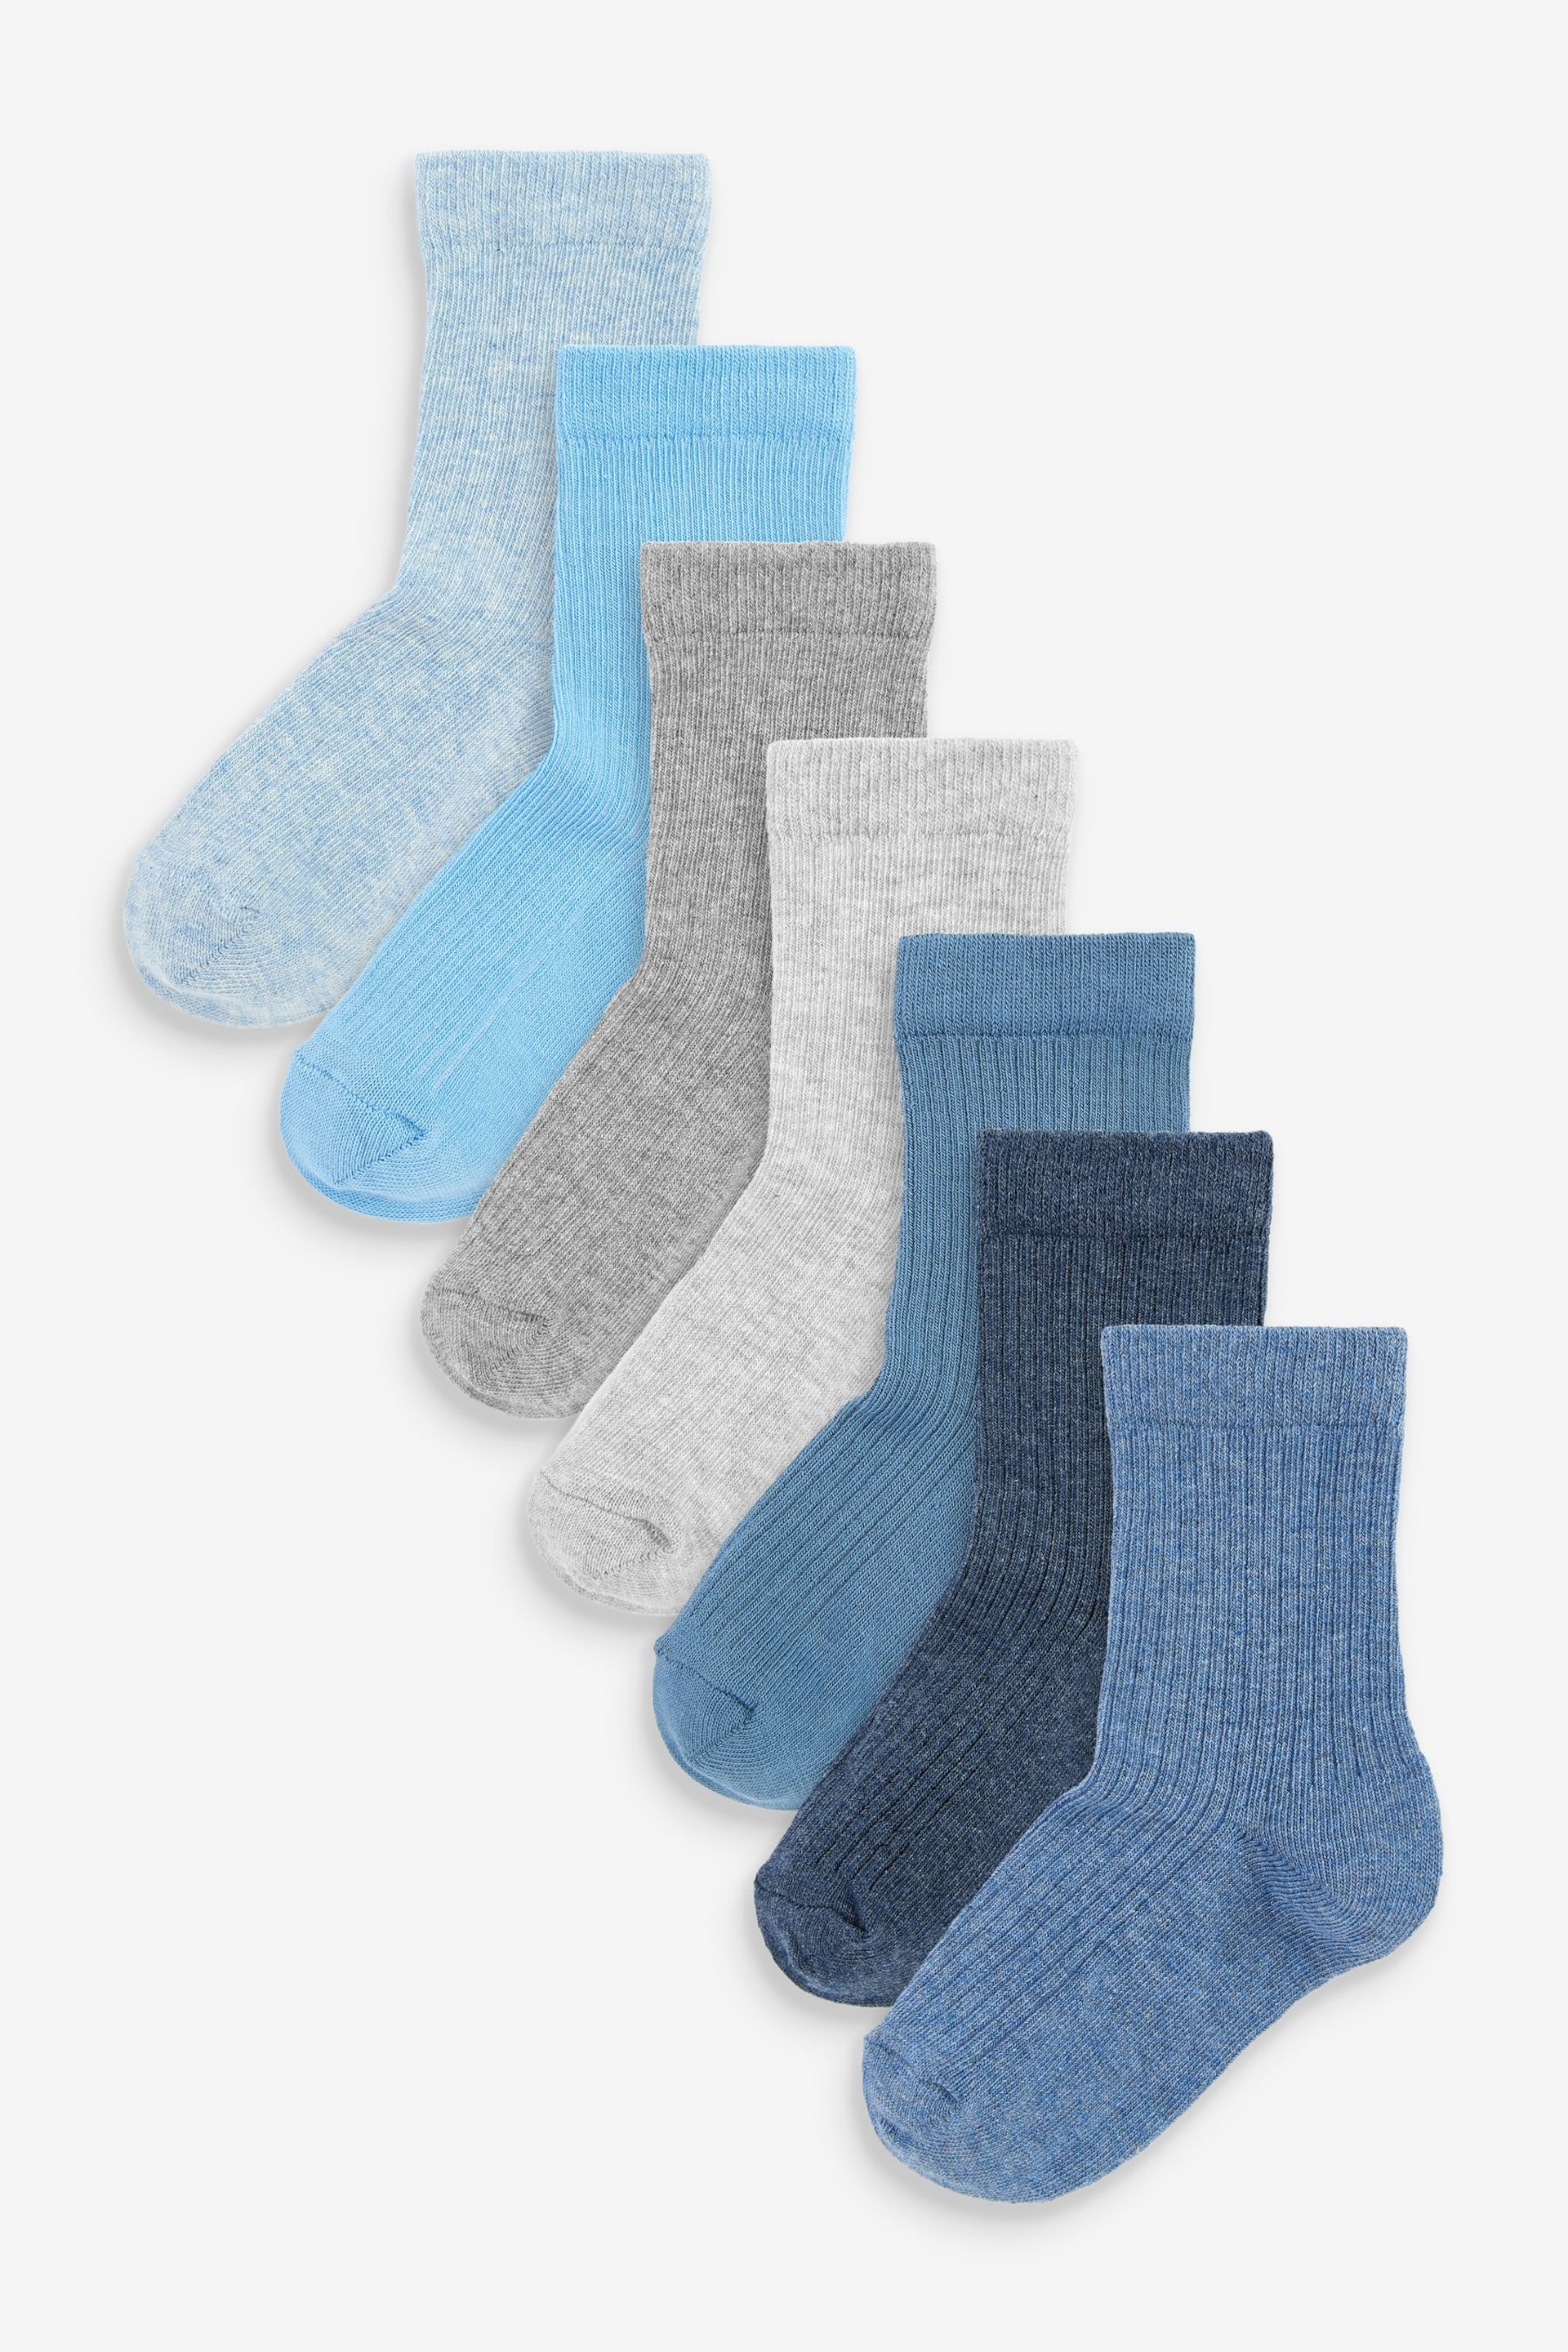 Blue/Navy Cotton Rich Fine Rib Socks 7 Pack - Image 1 of 8